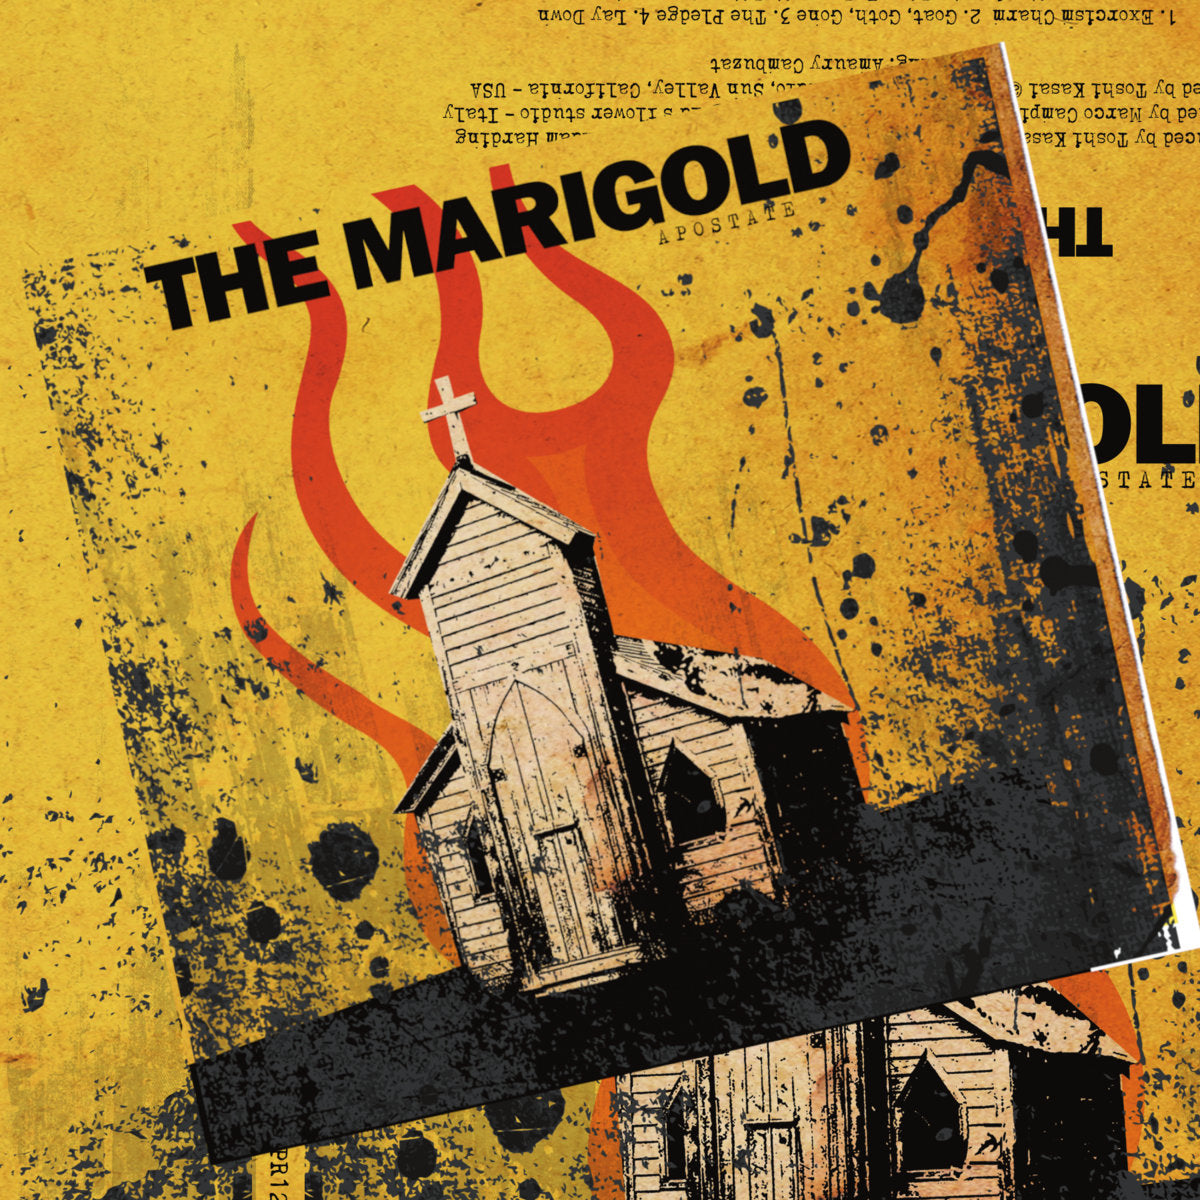 The Marigold - "Apostate" Compact Disc